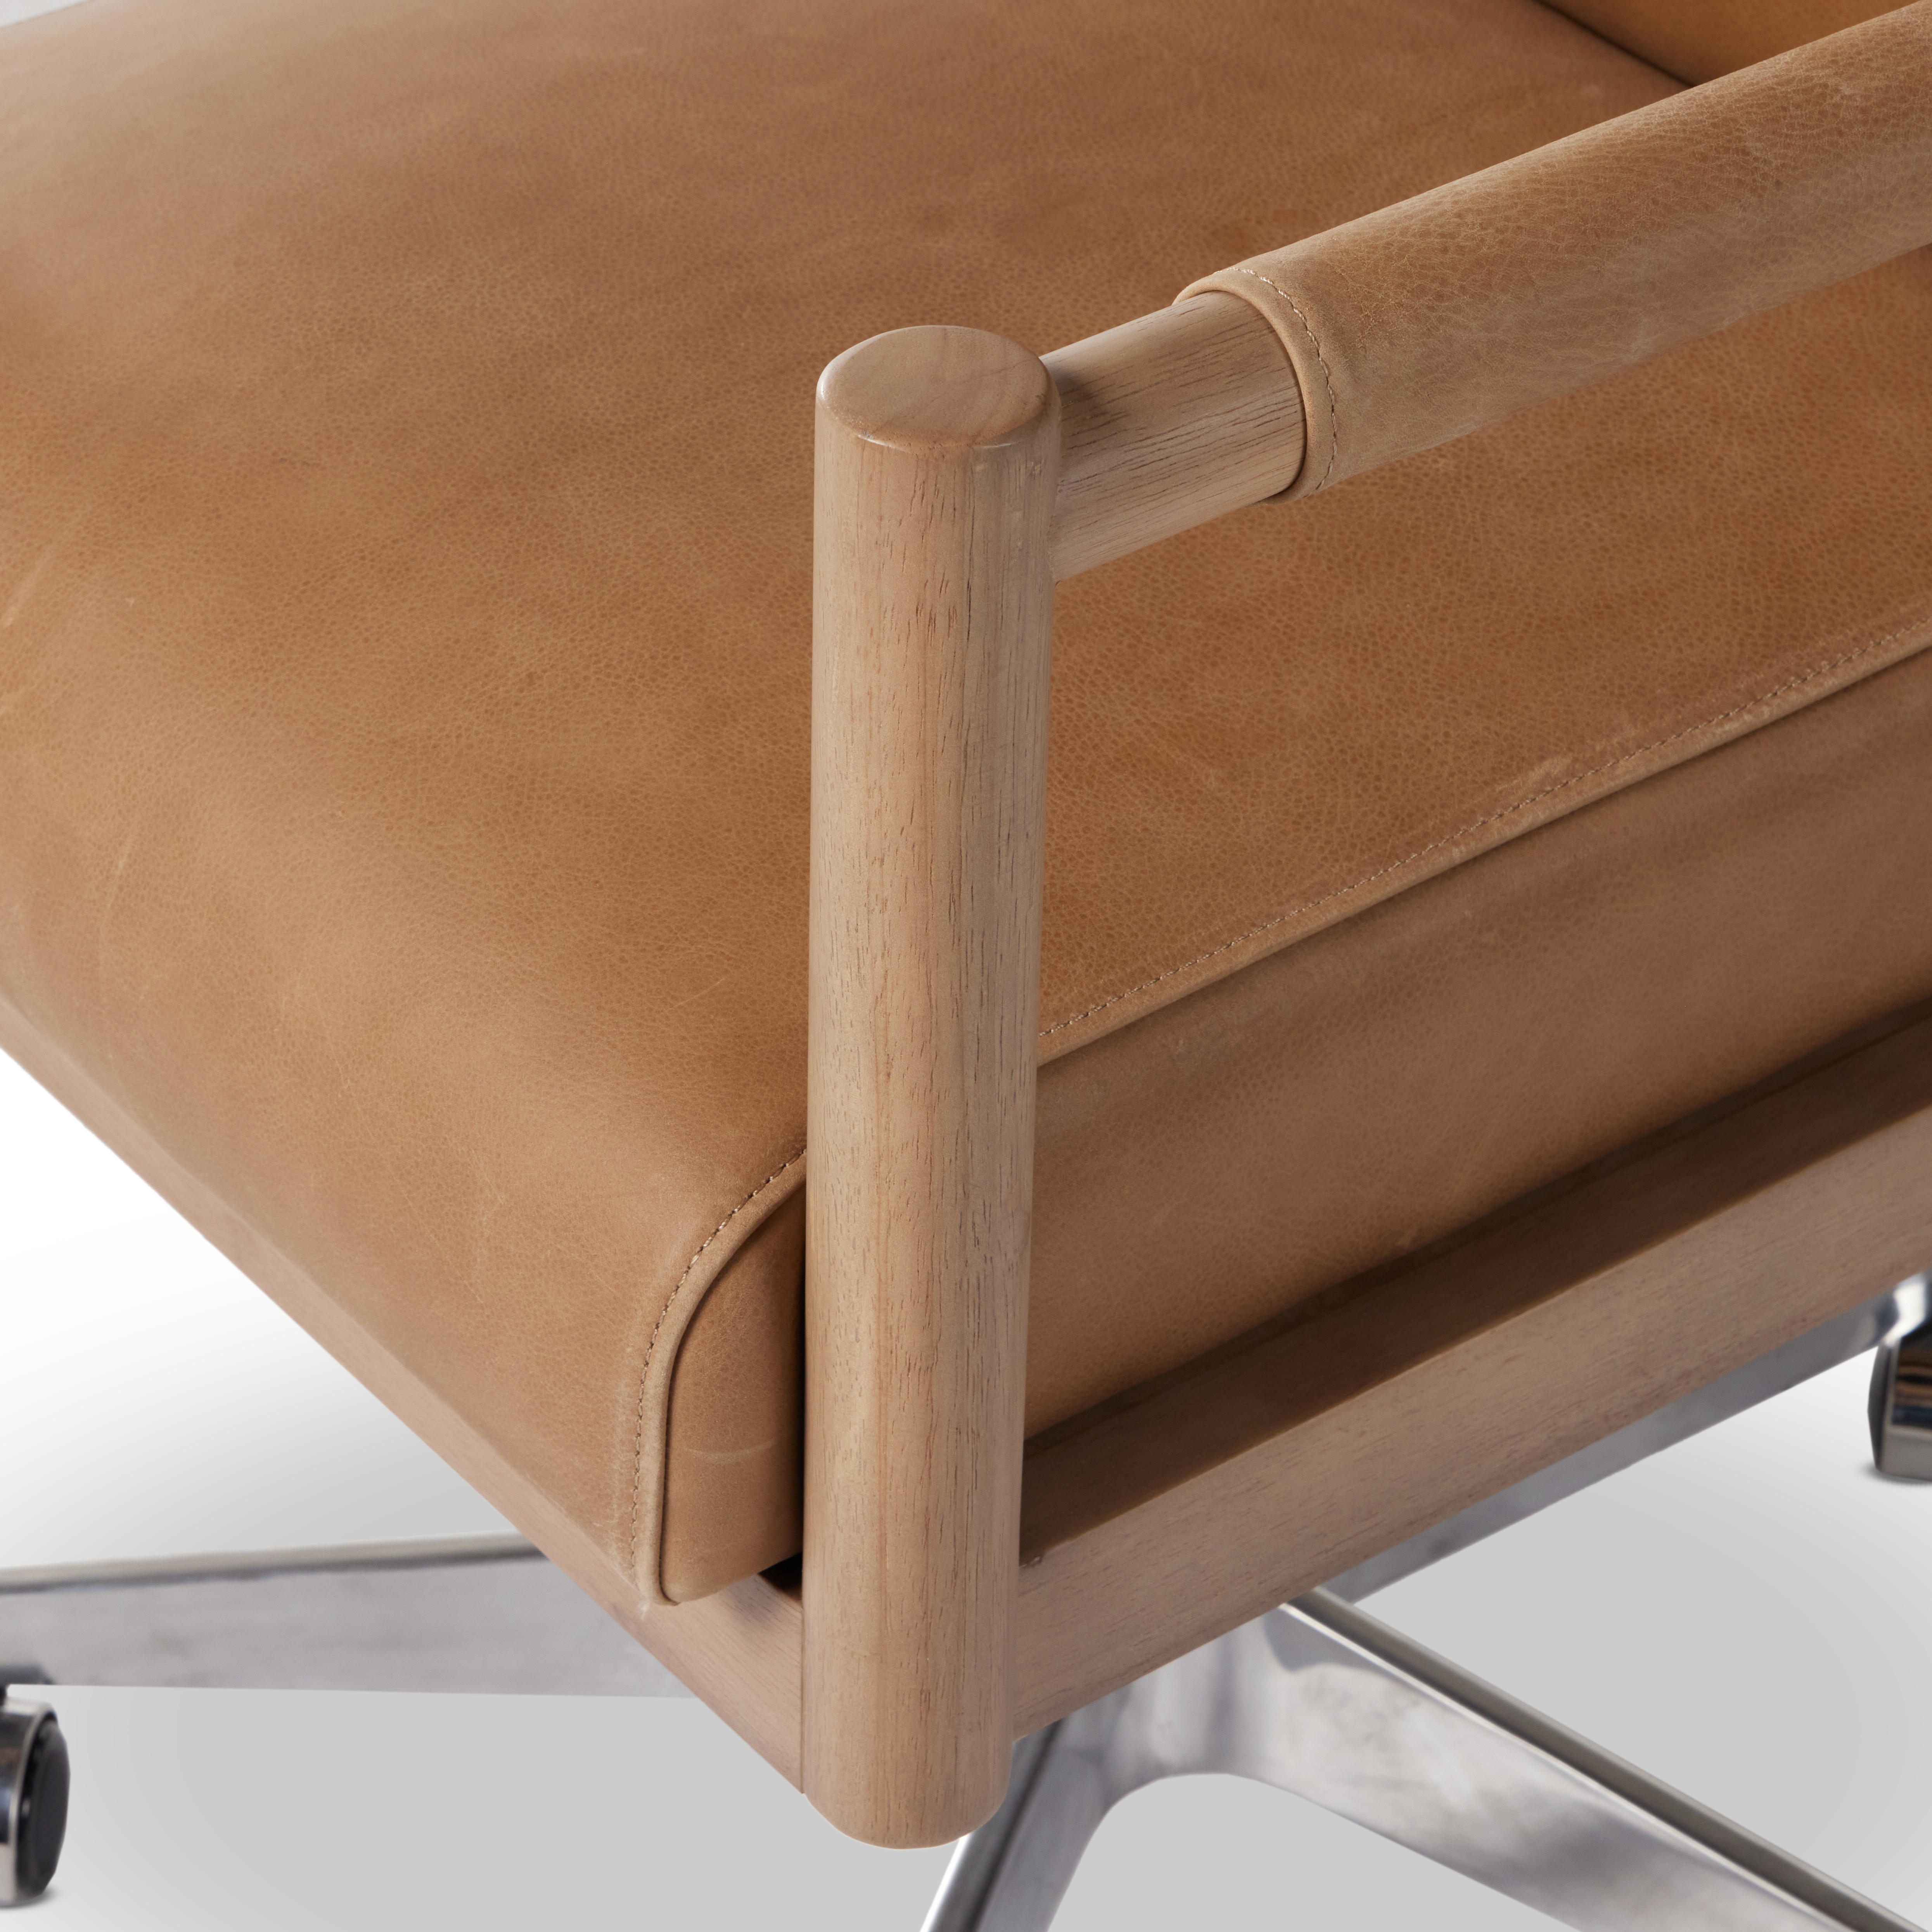 Kiano Desk Chair-Palermo Drift - Image 2